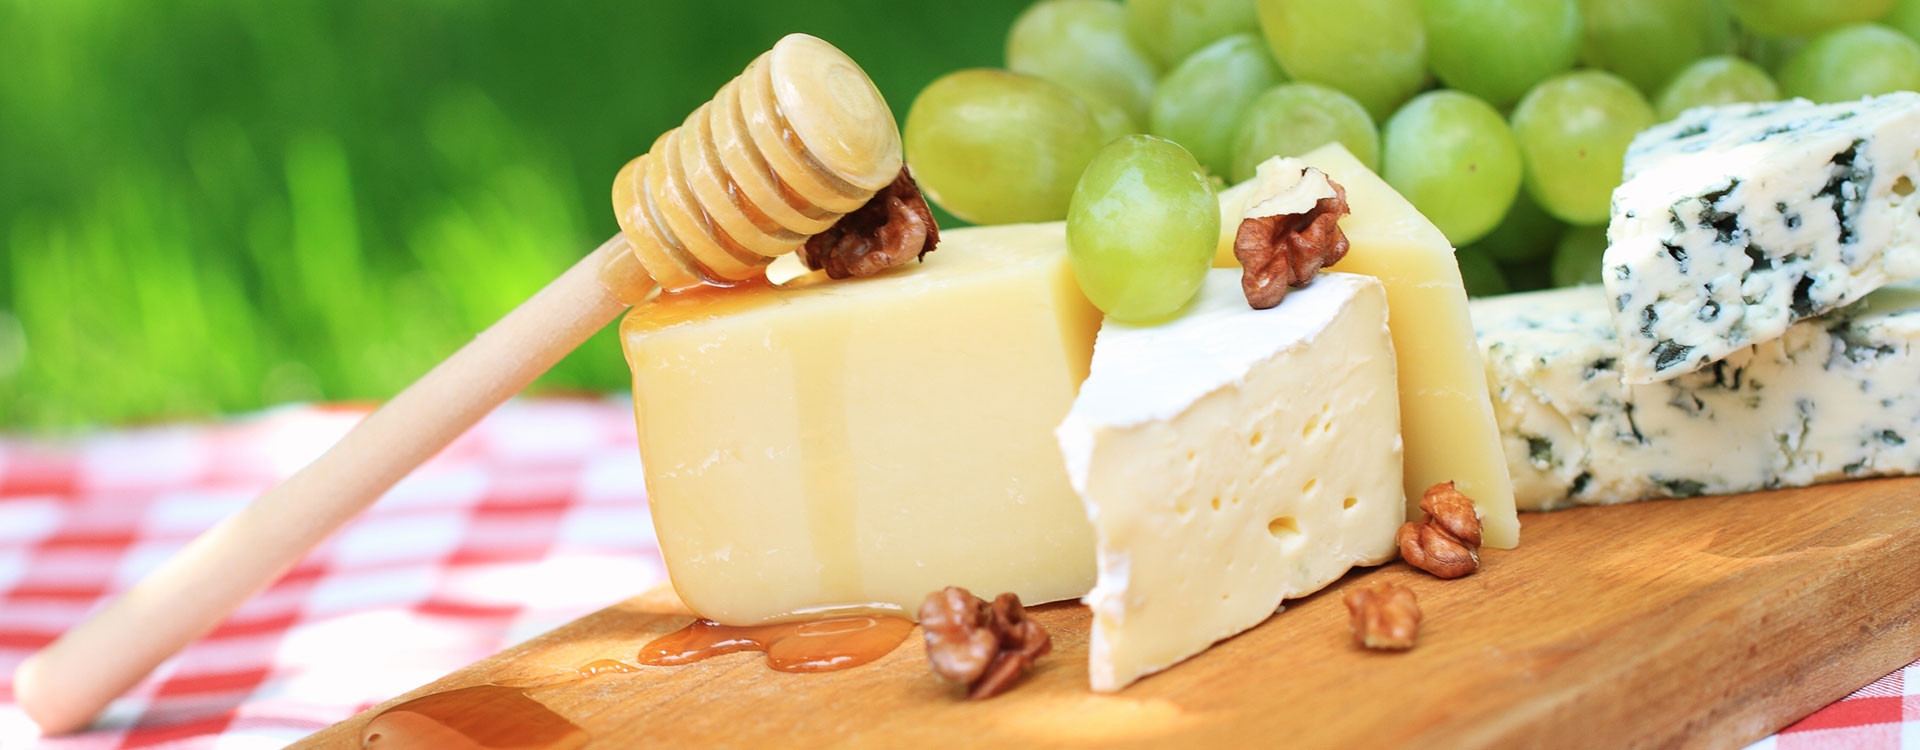 Italian cheeses for picnics